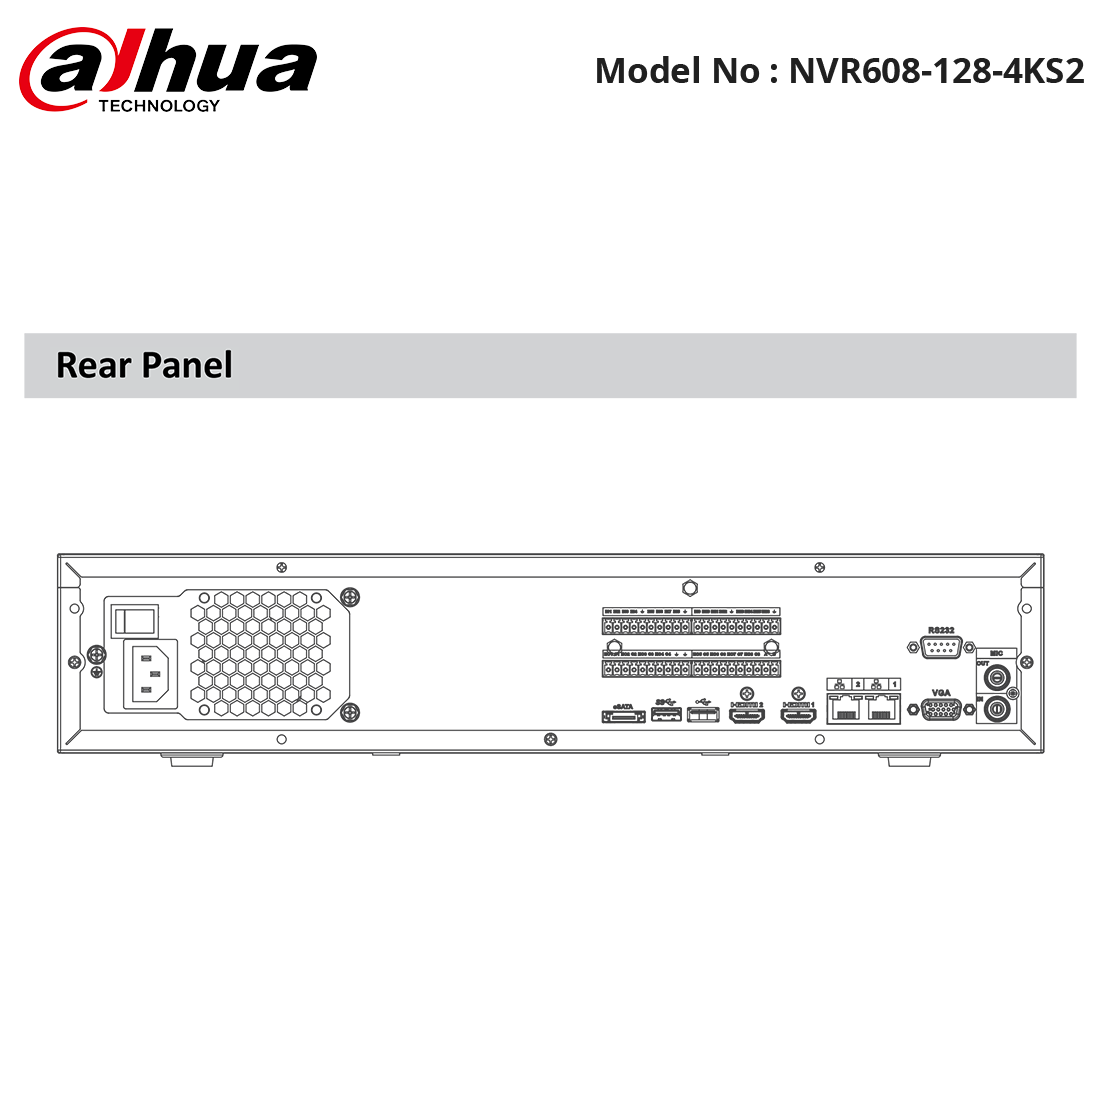 NVR608-128-4KS2 Rear Panel